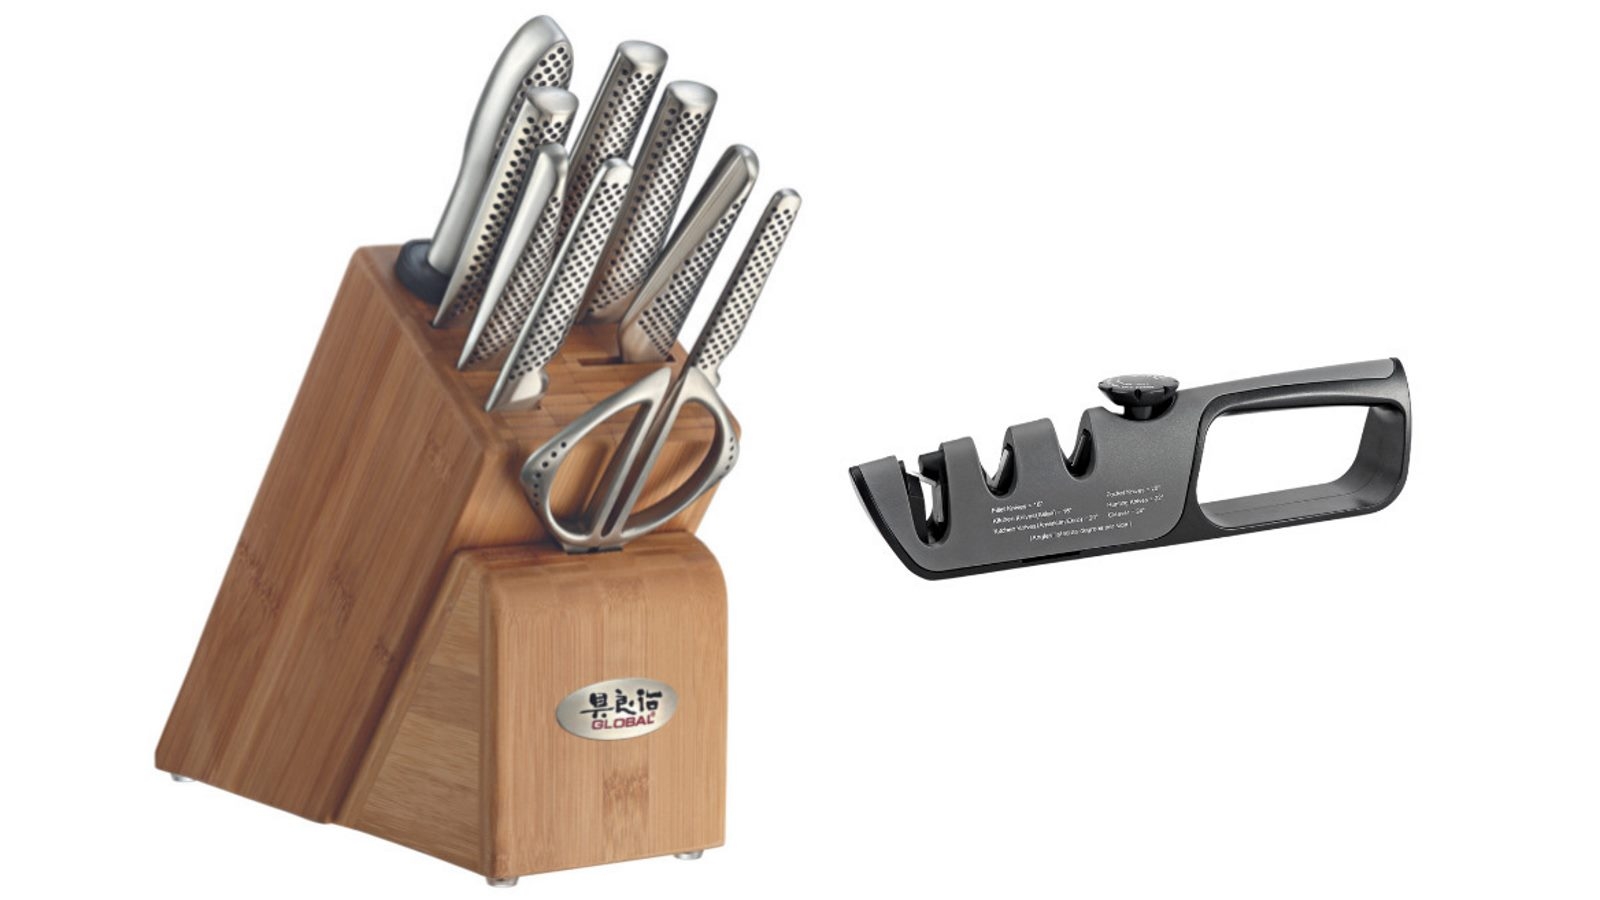 Koch Systeme By Carl Schmidt Sohn 6 Piece Stainless Steel Assorted Knife Set